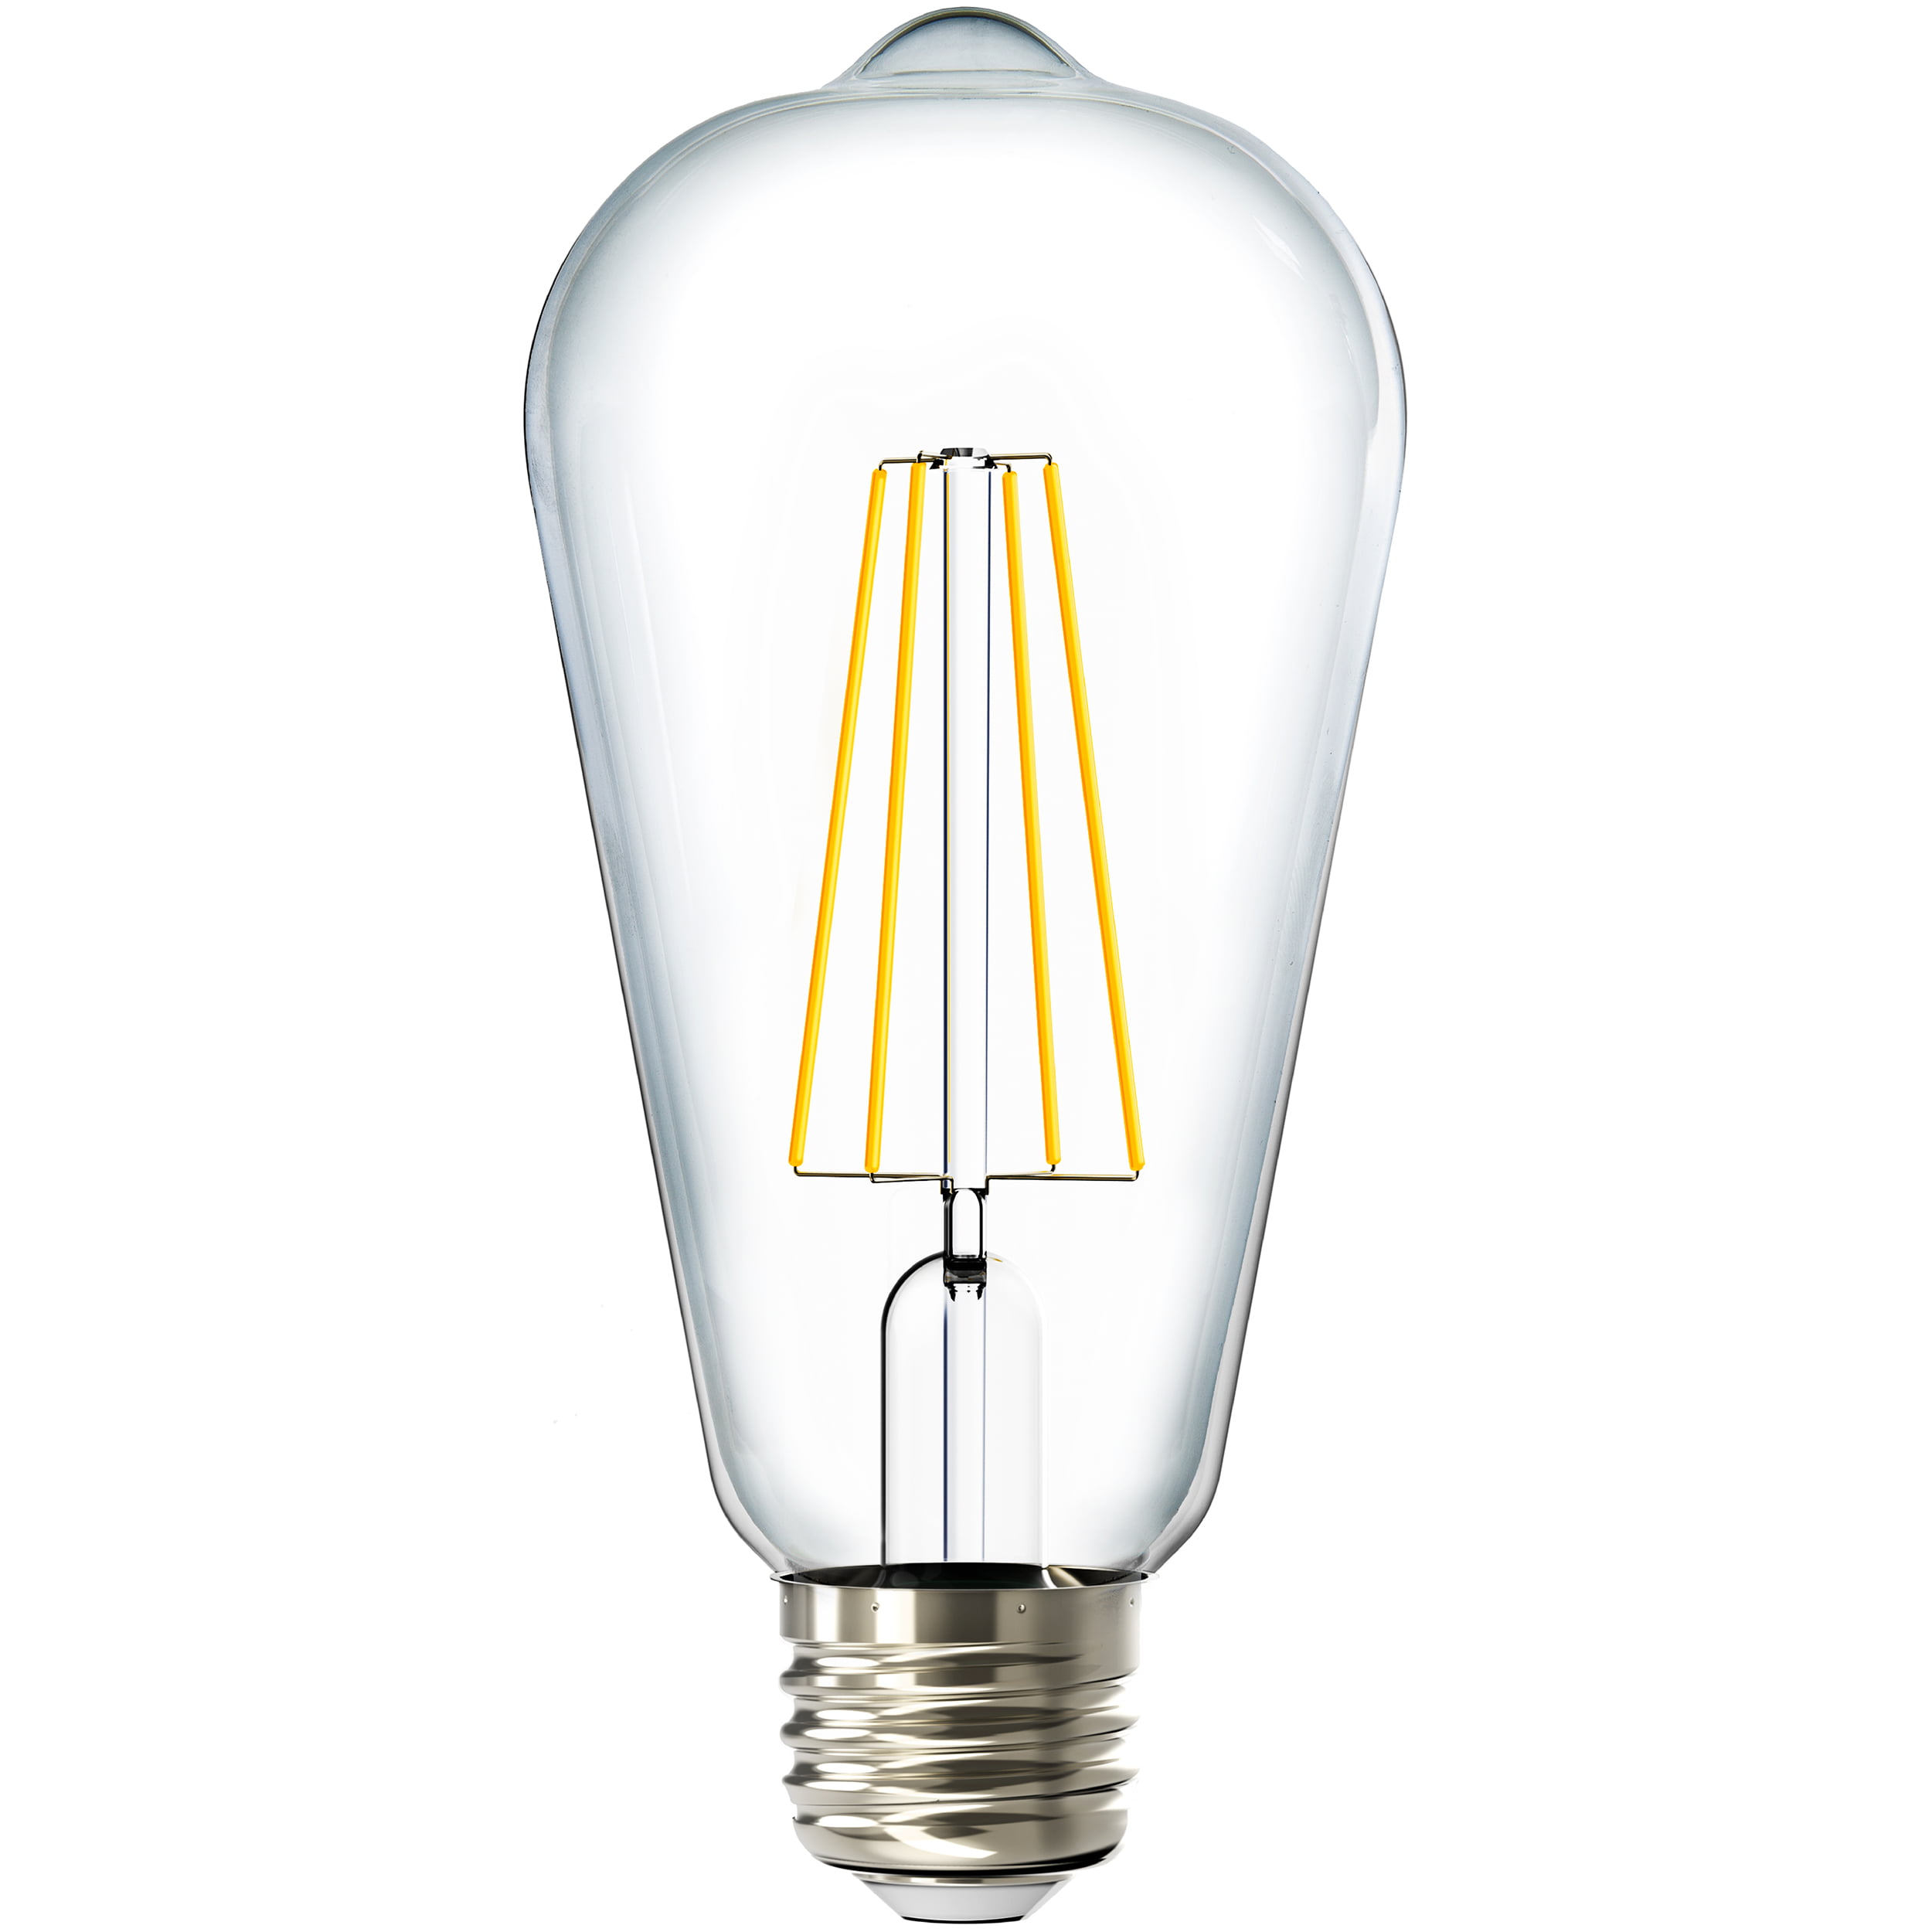 Details about   Aamsco ST64-4W4S E27 LED ST64 Antique Filament Lamp 4W 2700K Dimmable E26 120V 